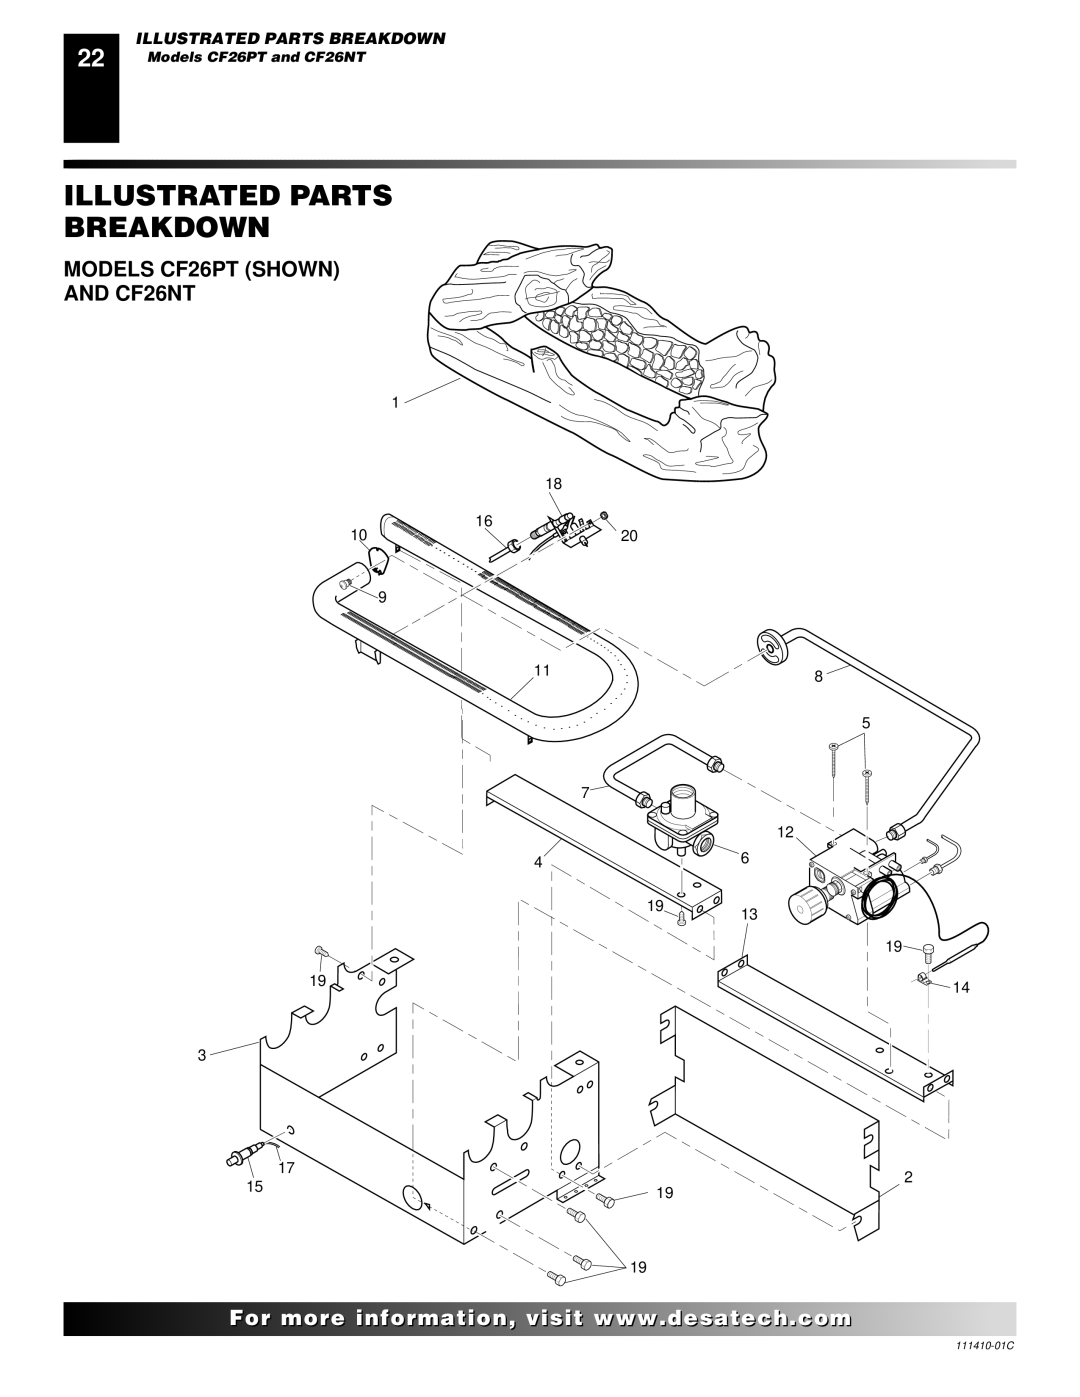 Desa installation manual Illustrated Parts Breakdown, Models CF26PT Shown CF26NT 